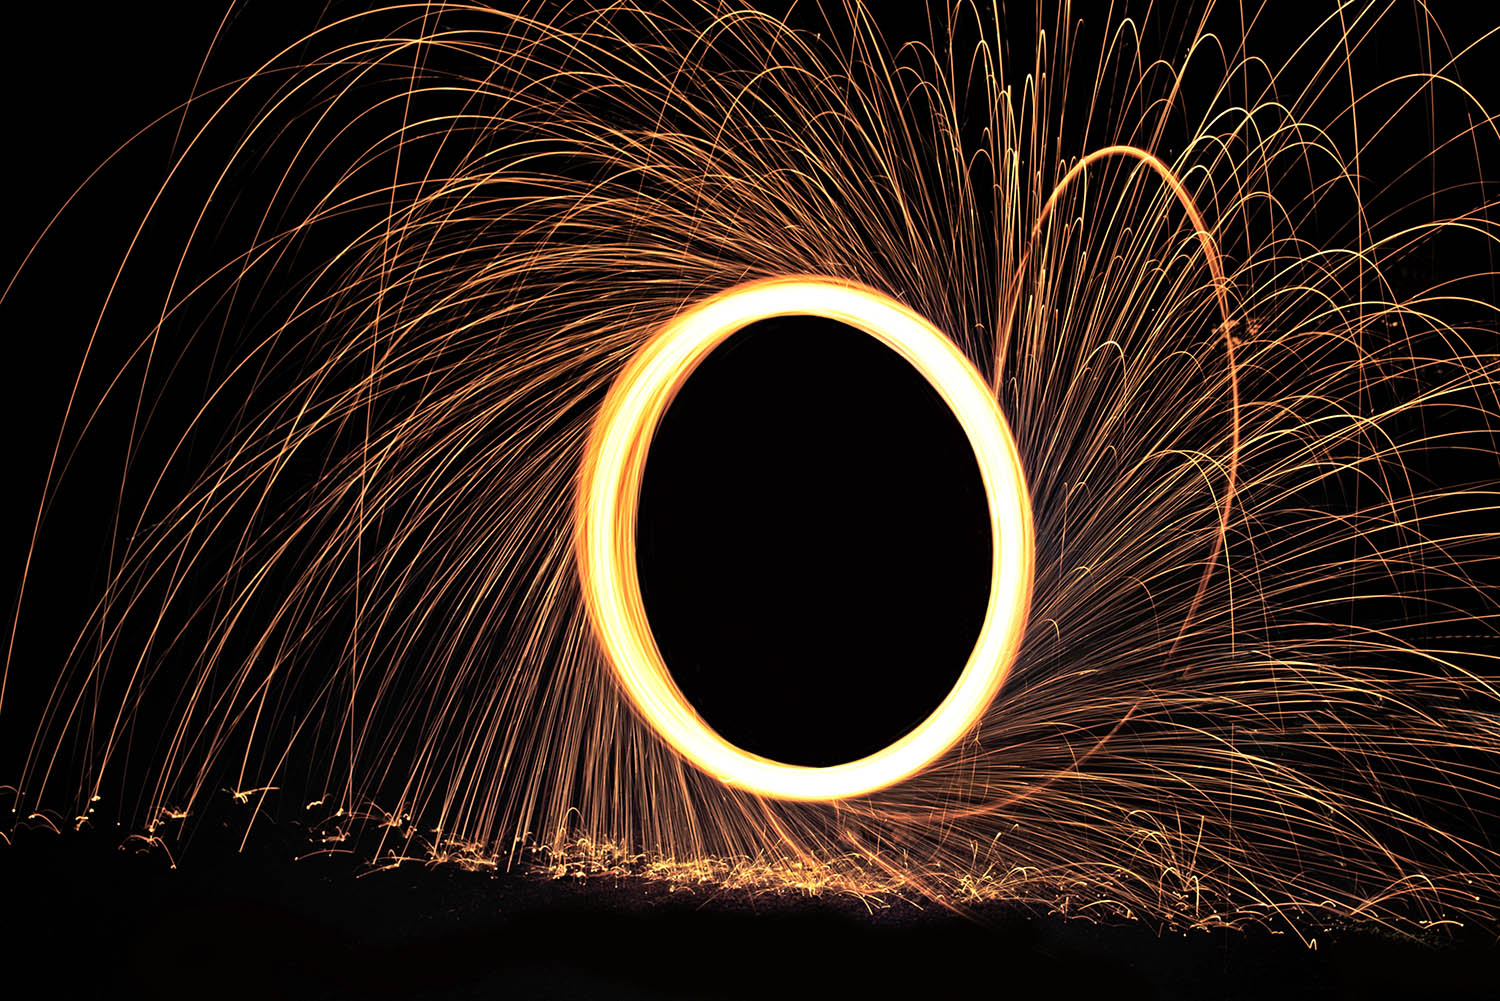 Spinning_Steel_Wool_Fire_Sparks_Long_Exposure_Light_Painting_Night.jpg